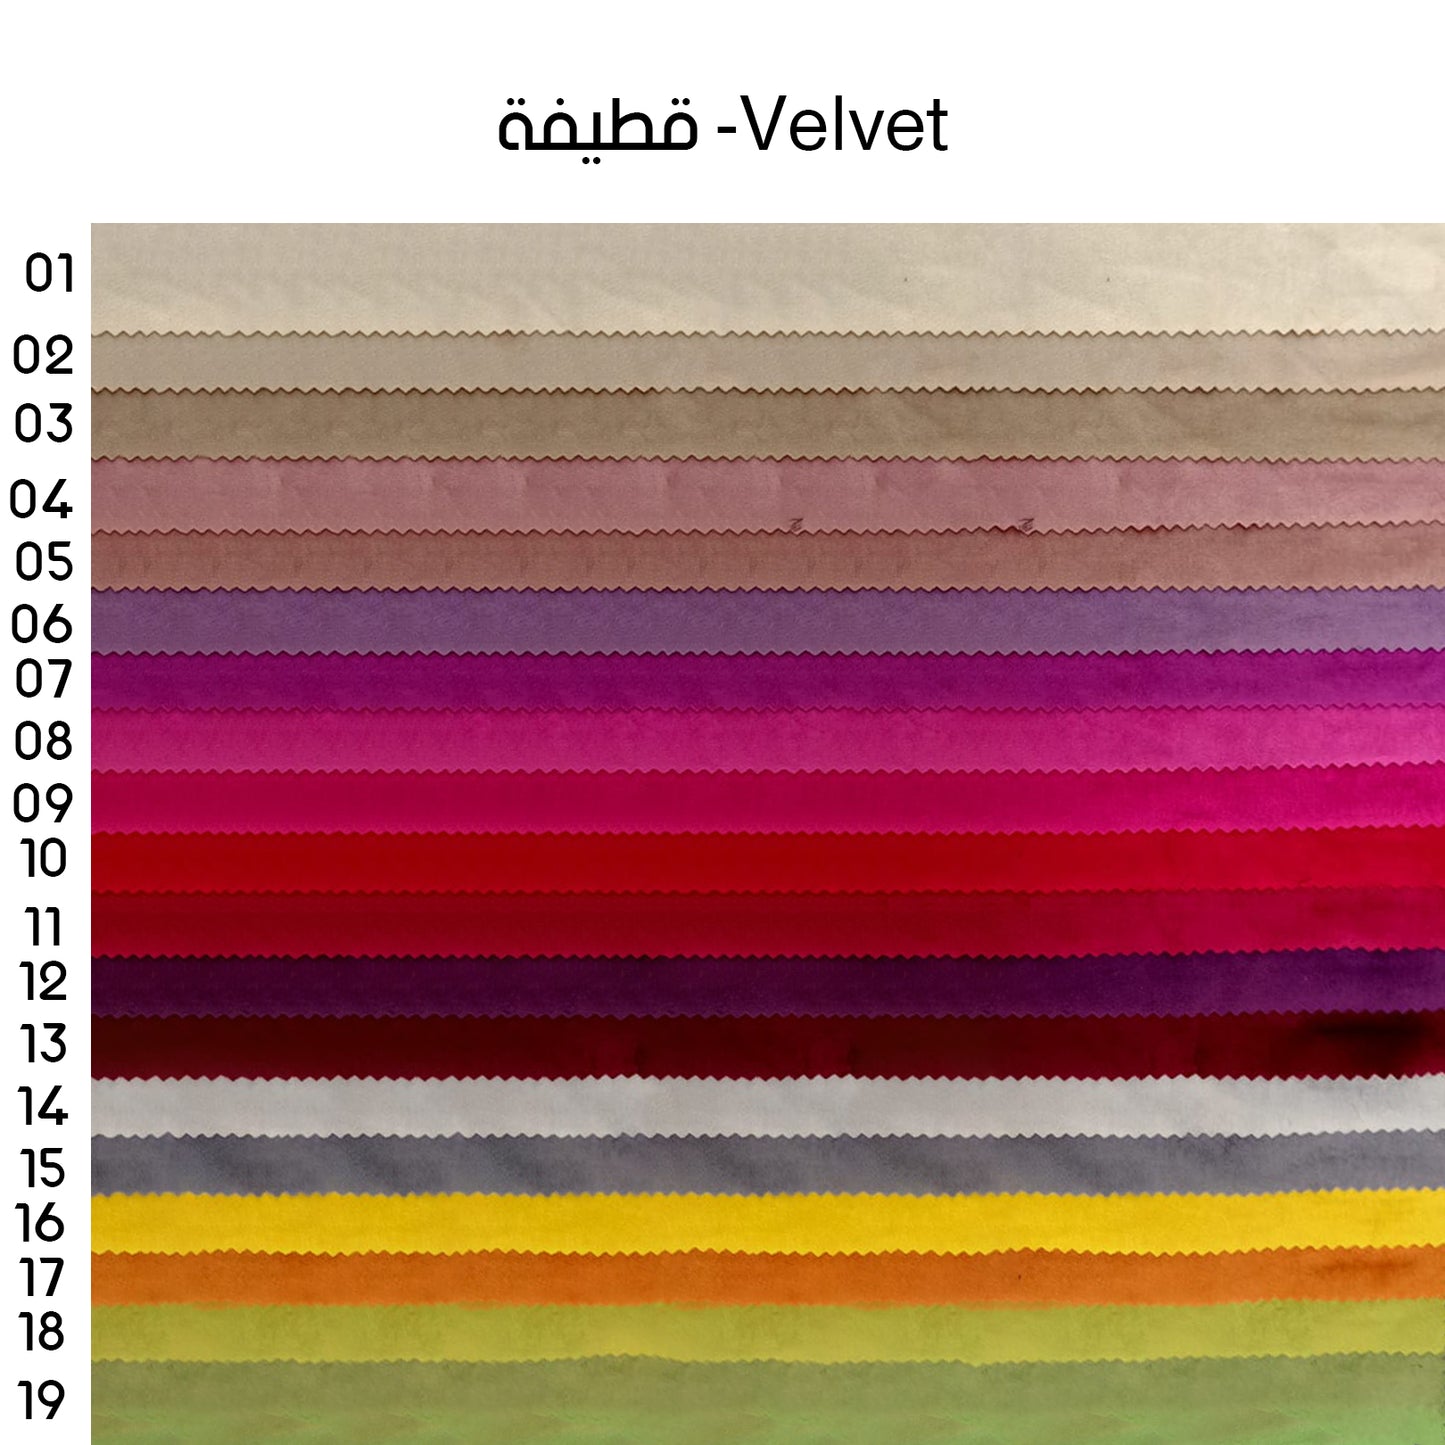 Natural beech wood sofa, 85 x 210 cm - multiple colors - DECO17